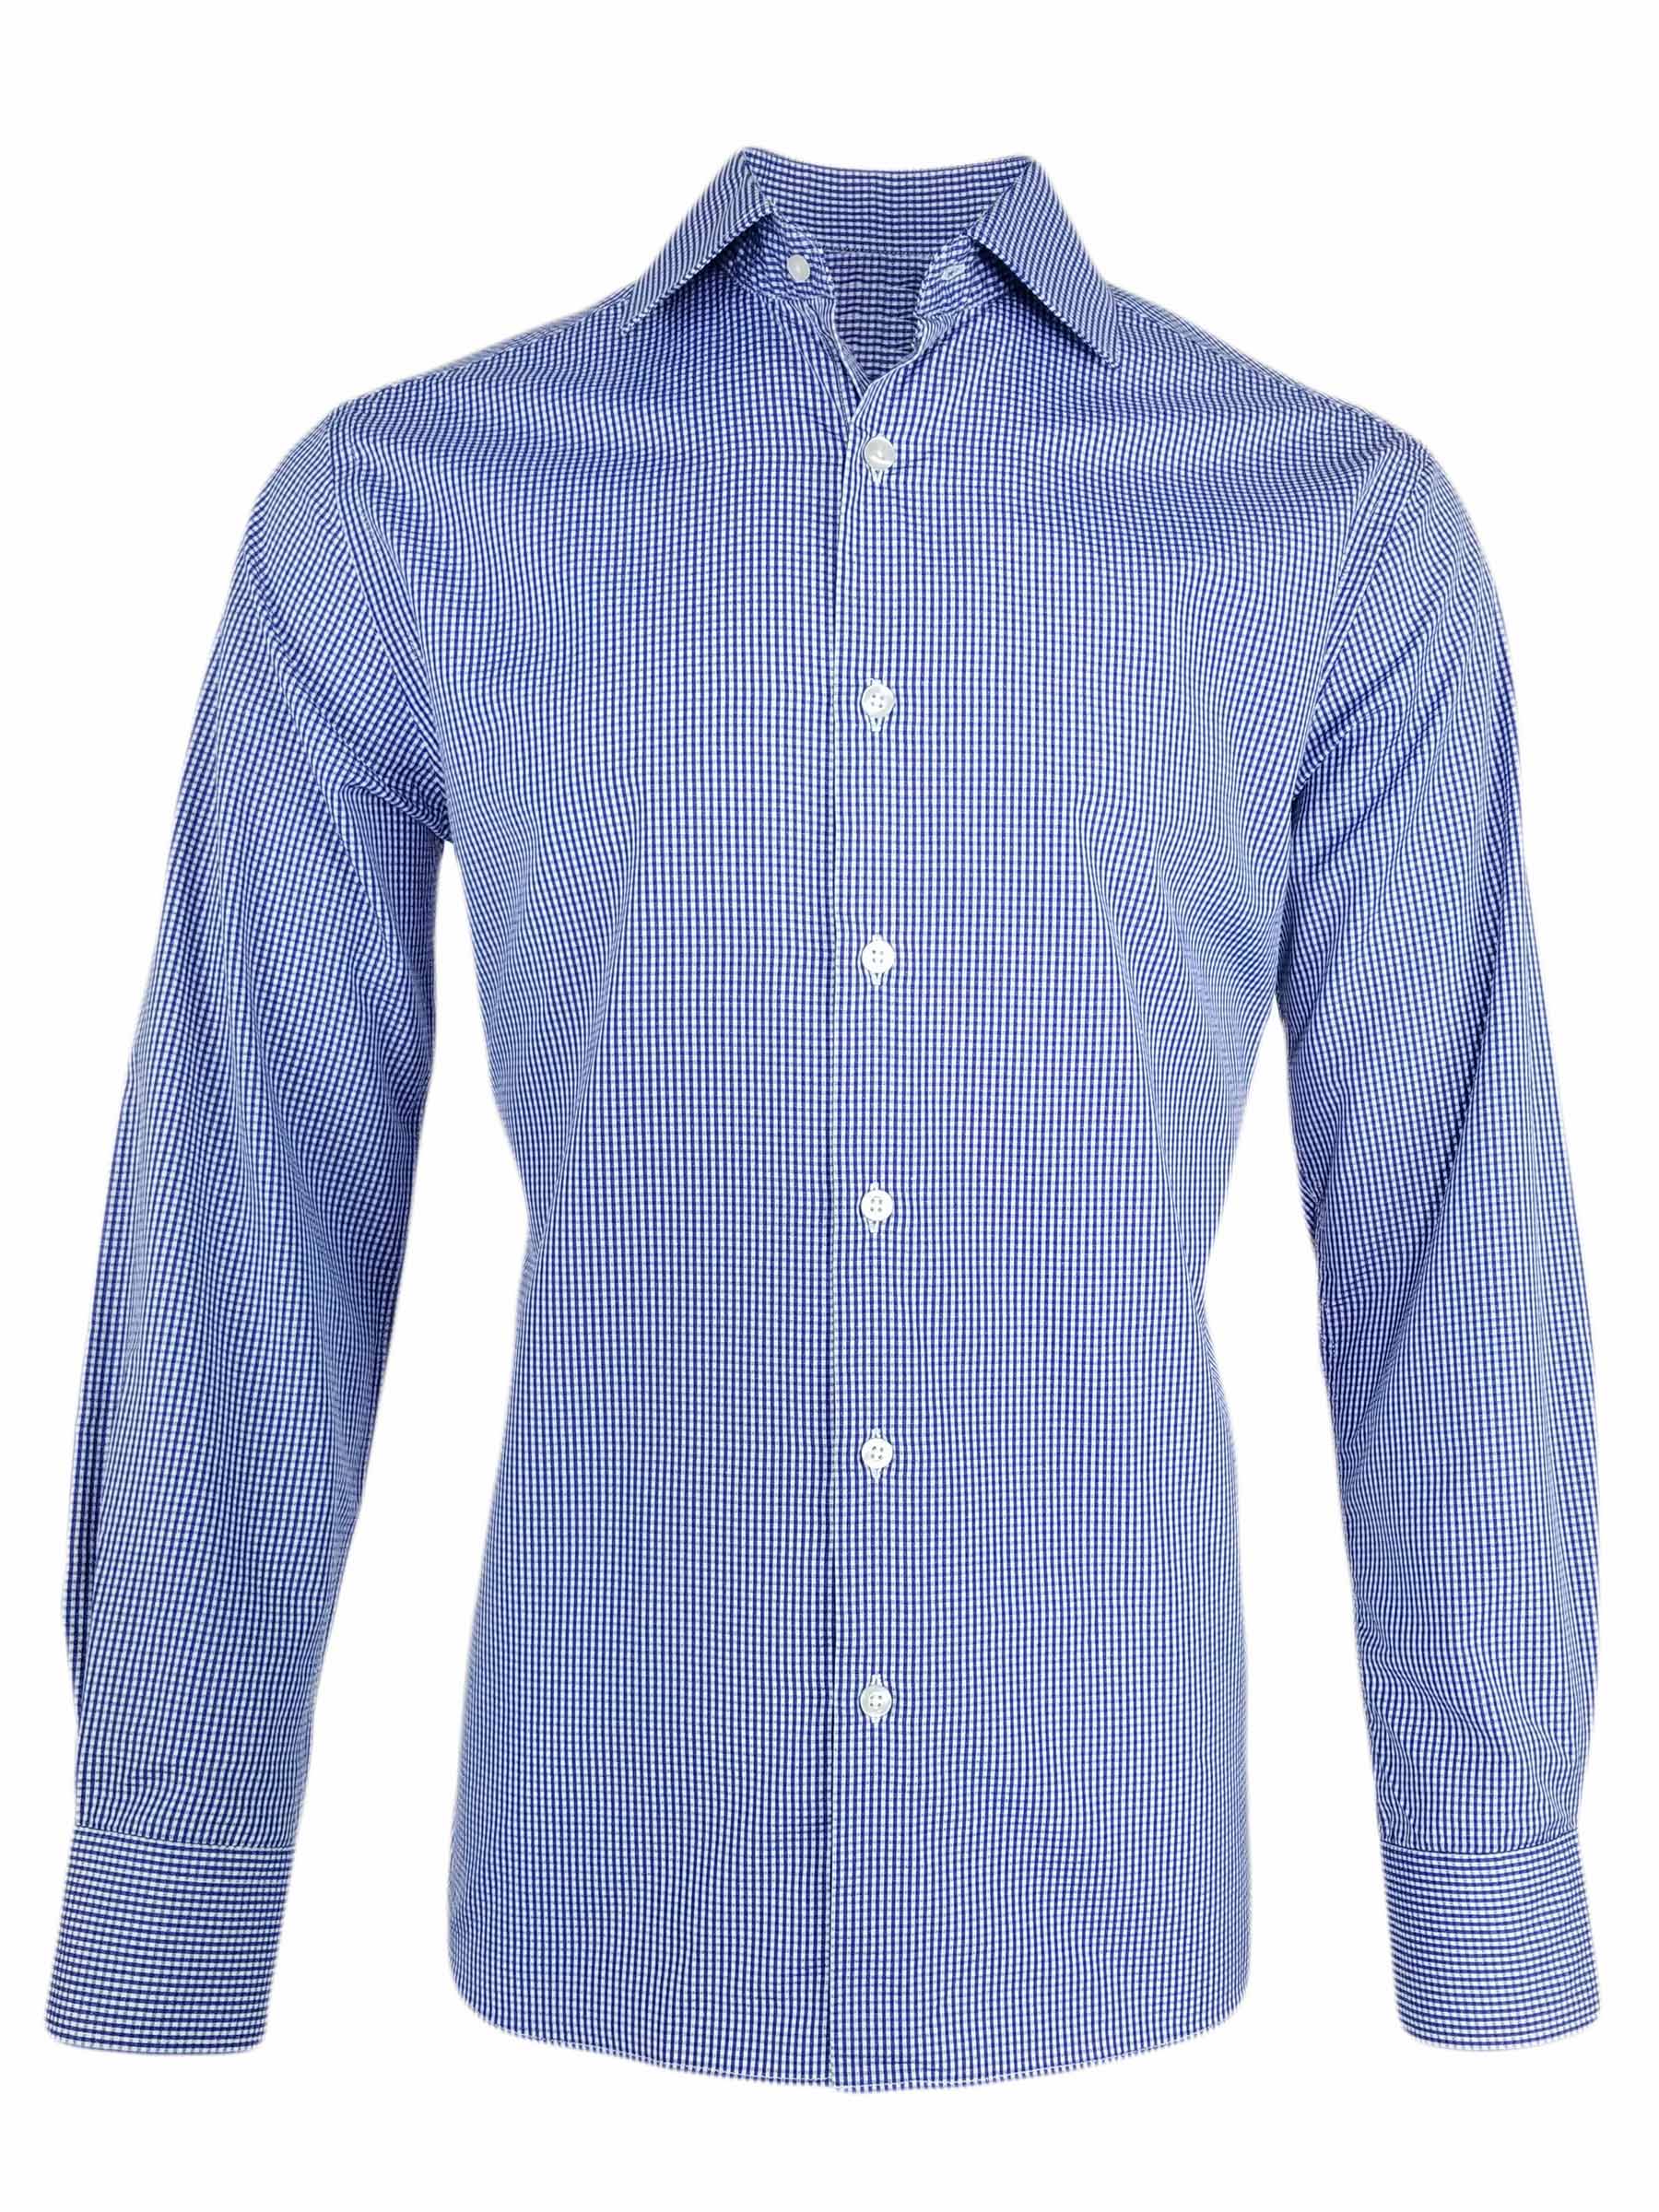 Men's Gingham Shirt - Cobalt Mini Gingham Check Shirt Long Sleeve ...